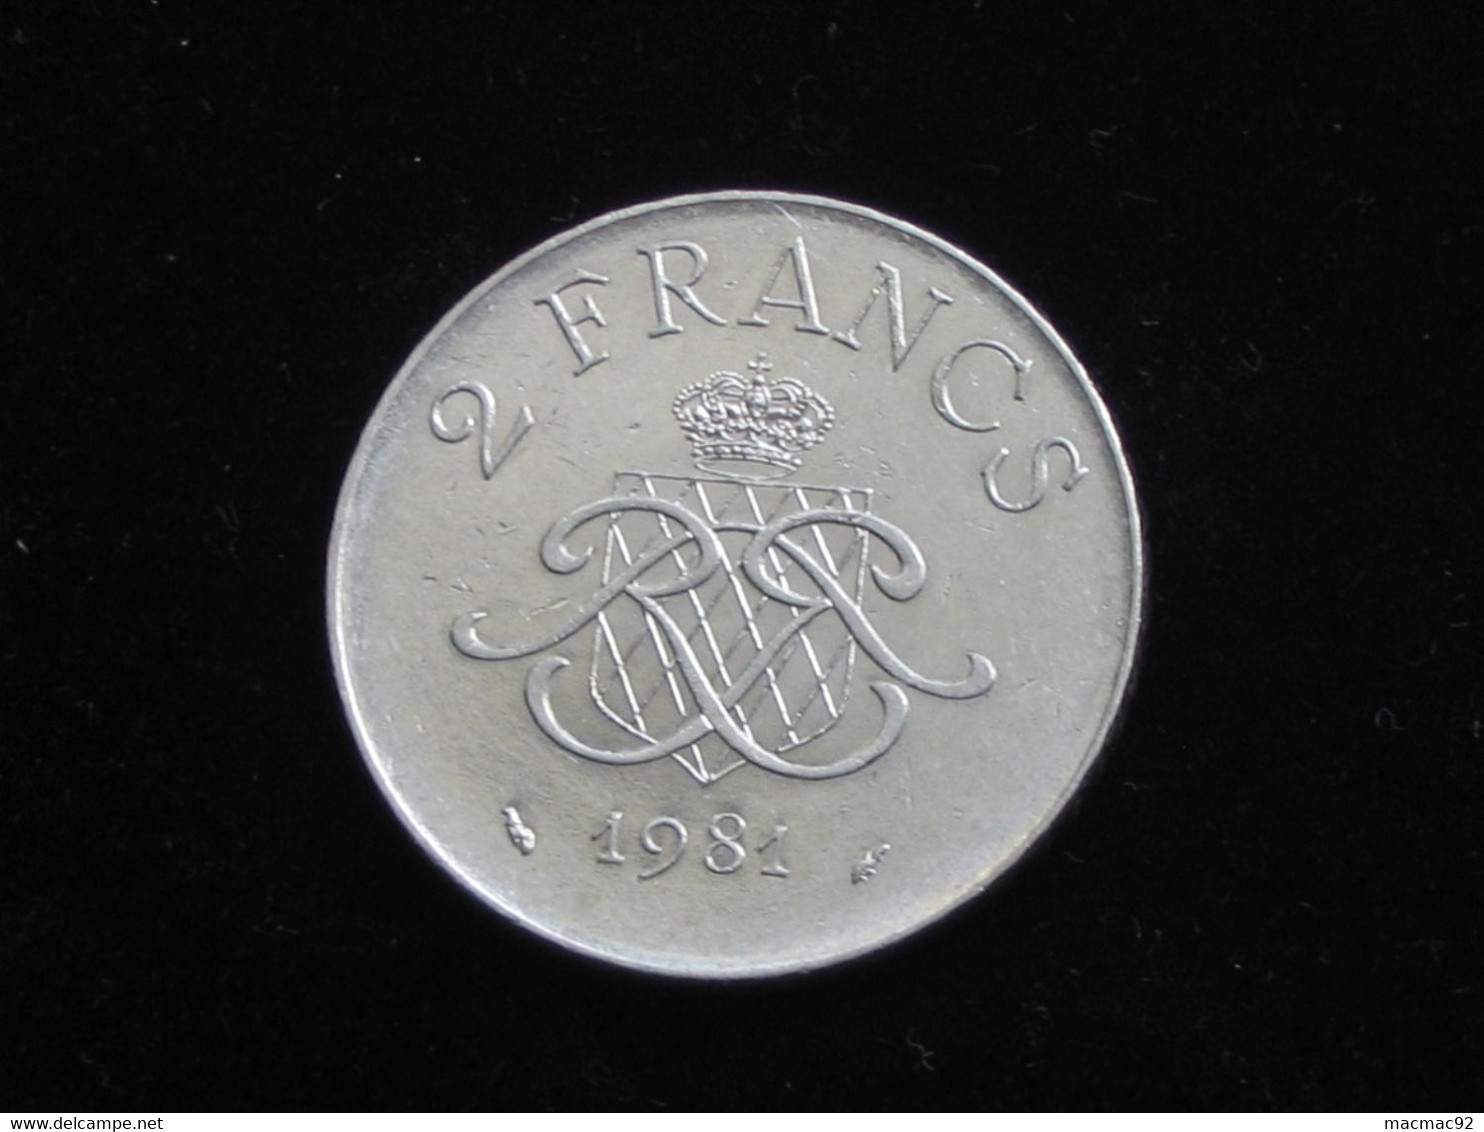 MONACO - 2 Francs 1981 - Rainier III Prince De Monaco **** EN ACHAT IMMEDIAT **** - 1949-1956 Oude Frank